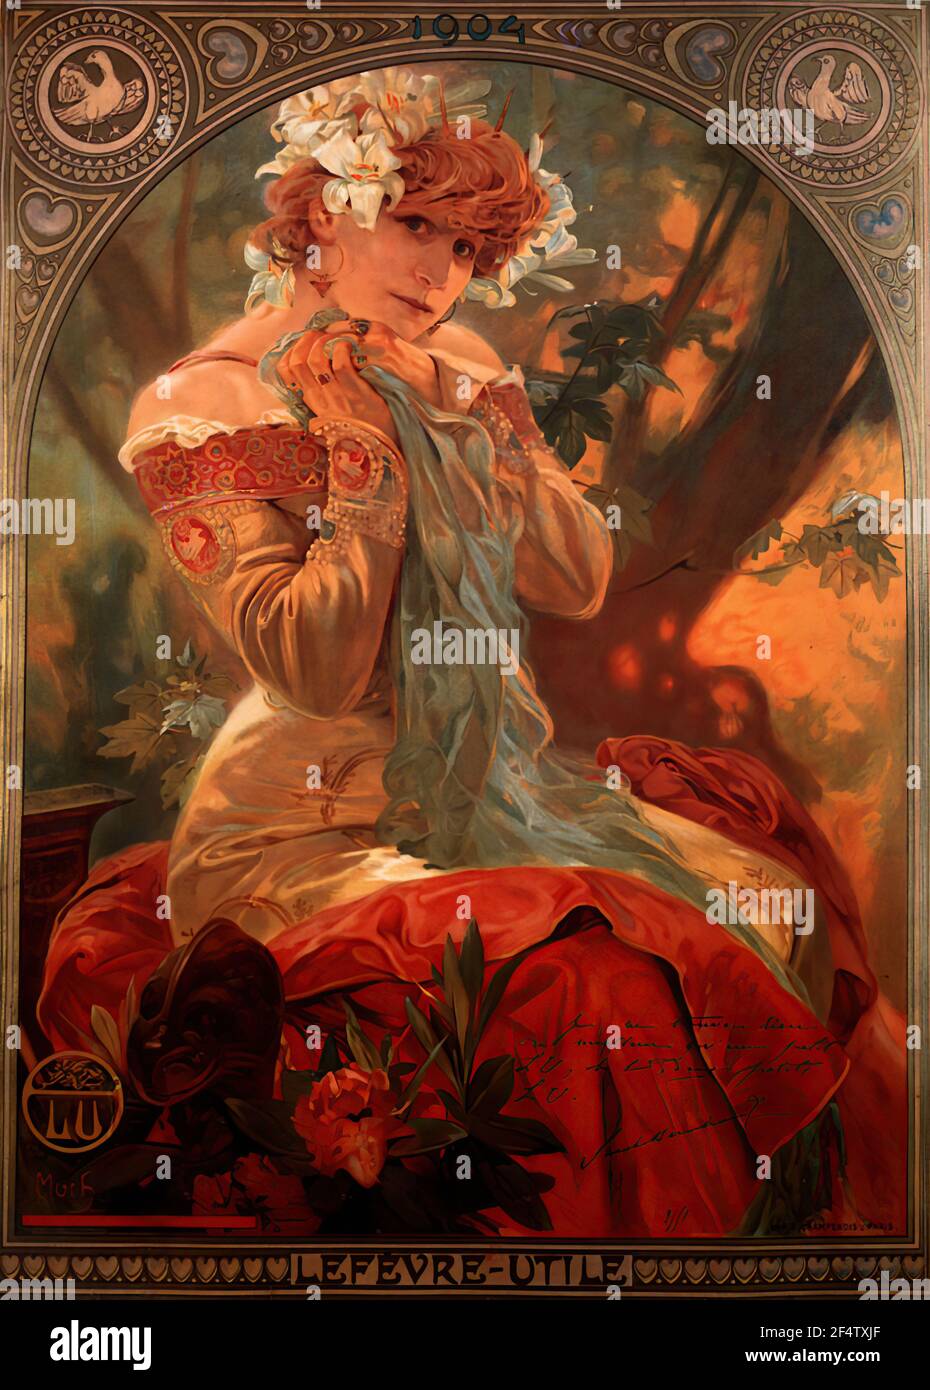 Alfons Mucha - Lefevre Utile 1903 Foto Stock